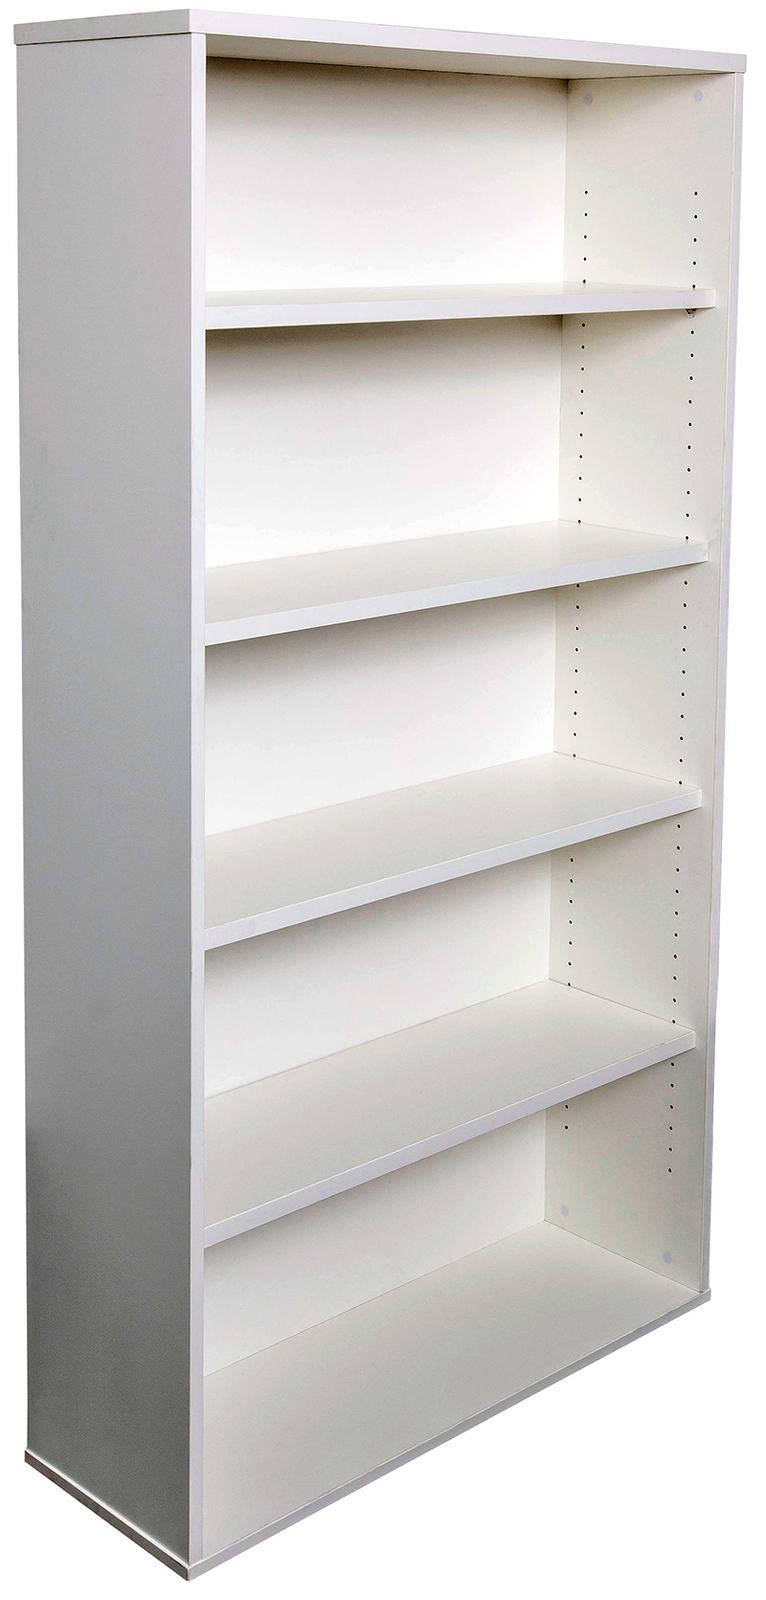 Express Tall White Bookcase Storage, Large White Book Shelves